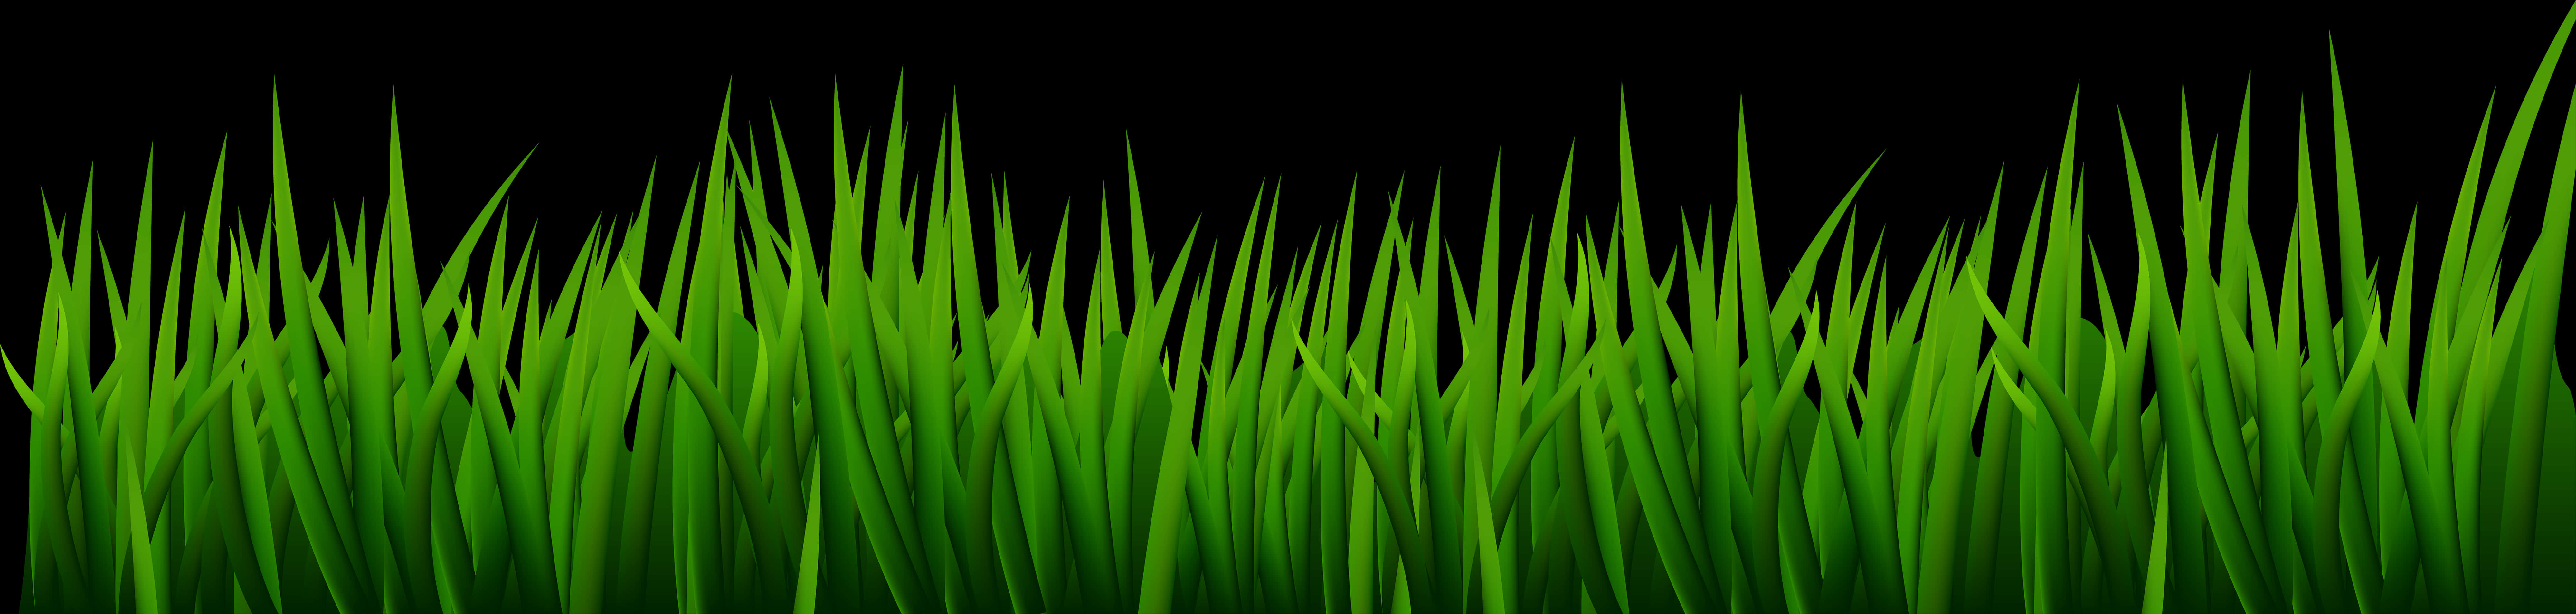 Vibrant Green Grasson Black Background